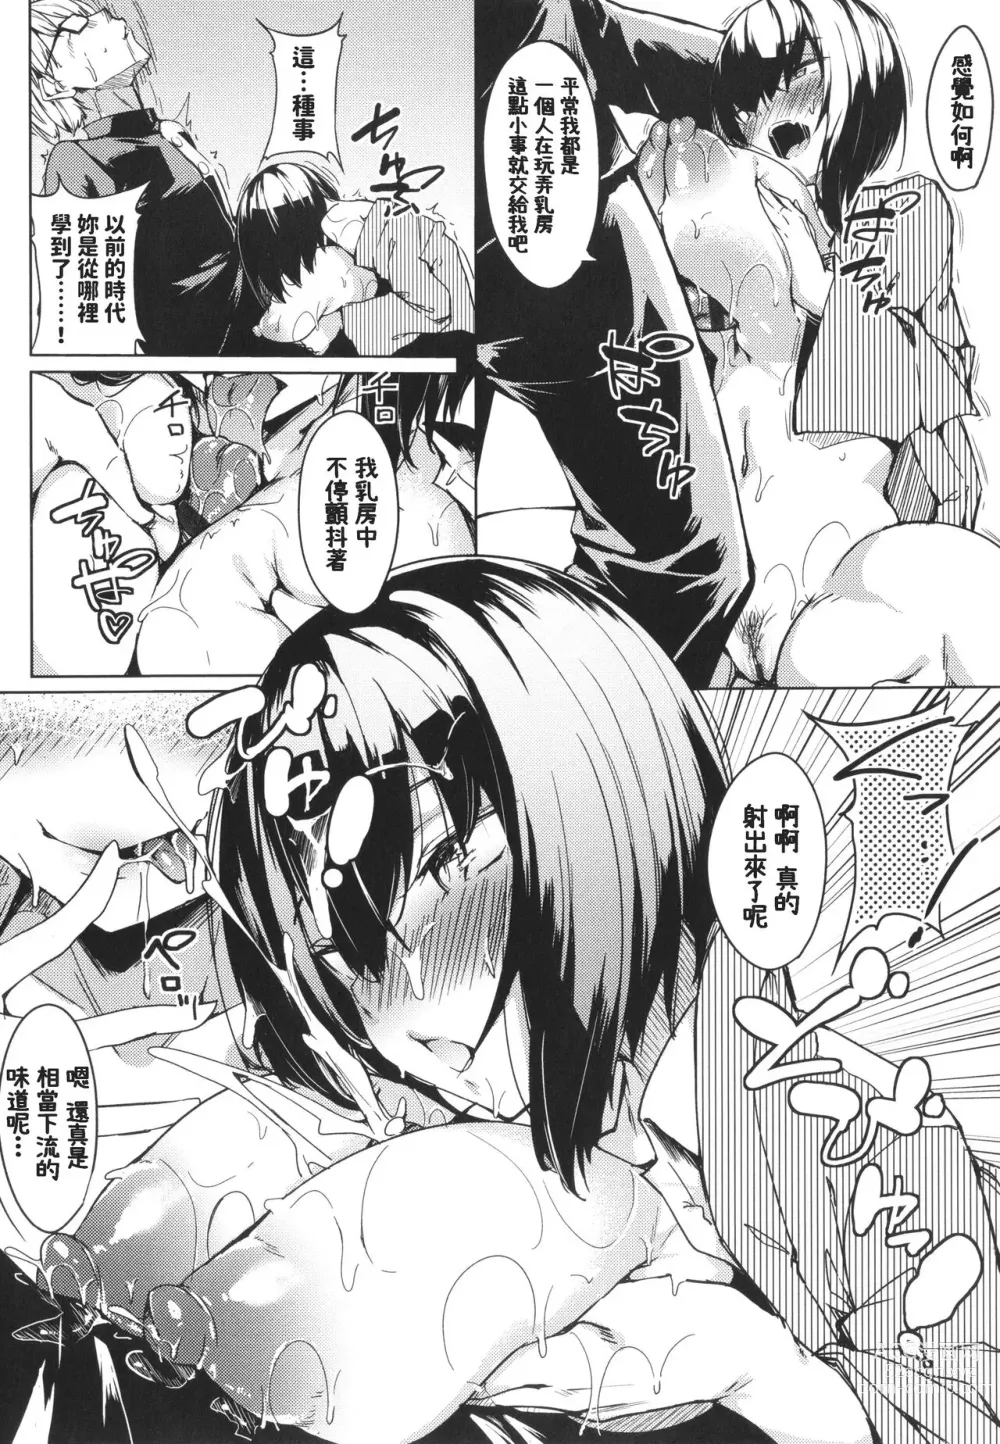 Page 9 of manga Yurei Shoujo no Oneigai